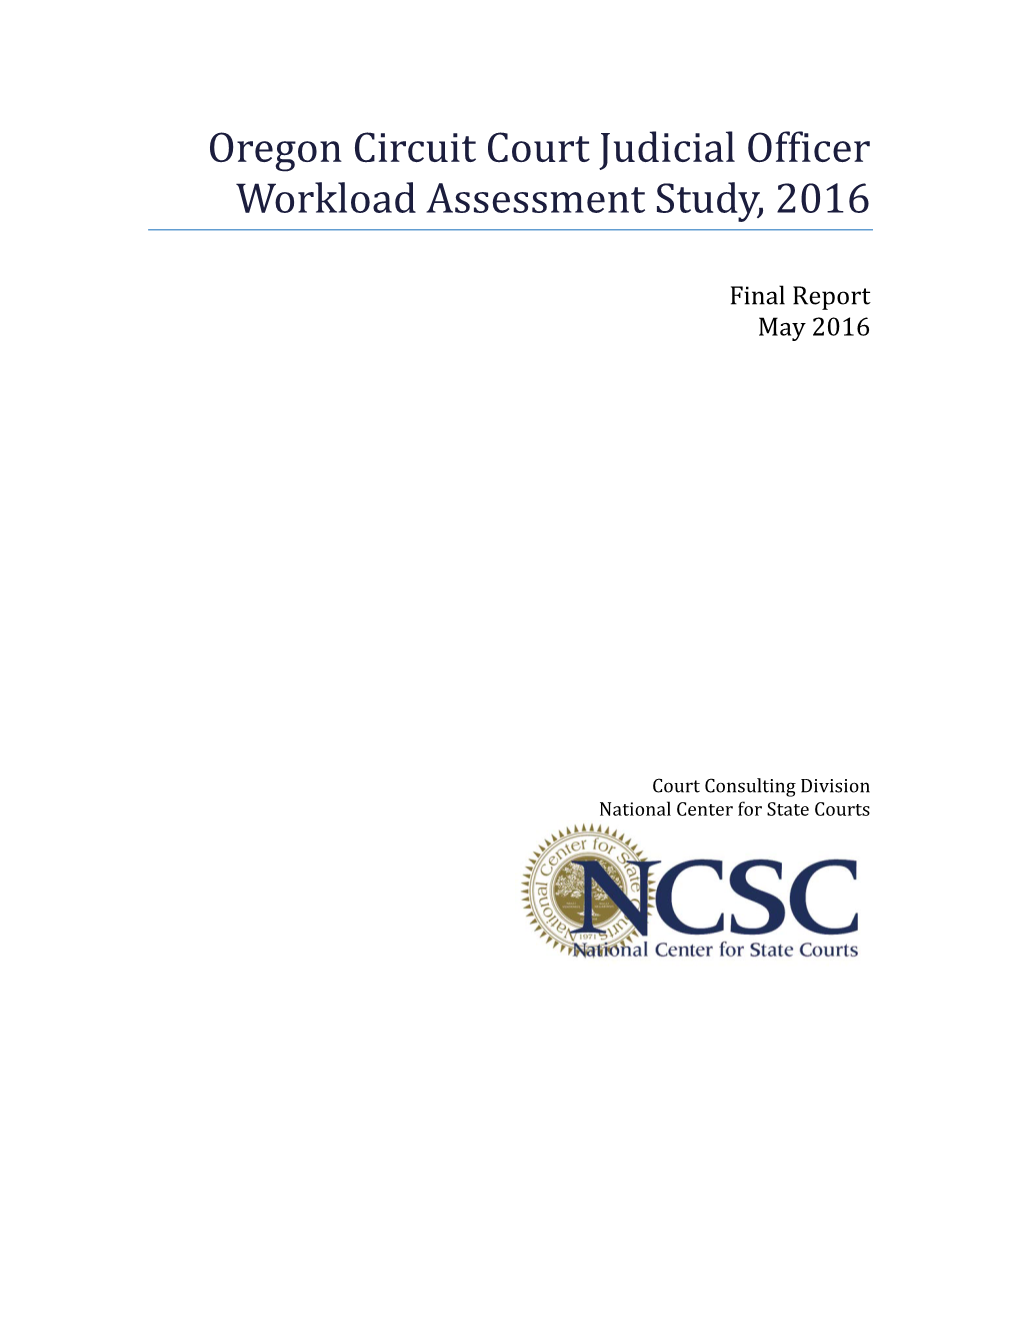 Oregon Circuit Court Judicial Officer Workload Assessment Study, 2016